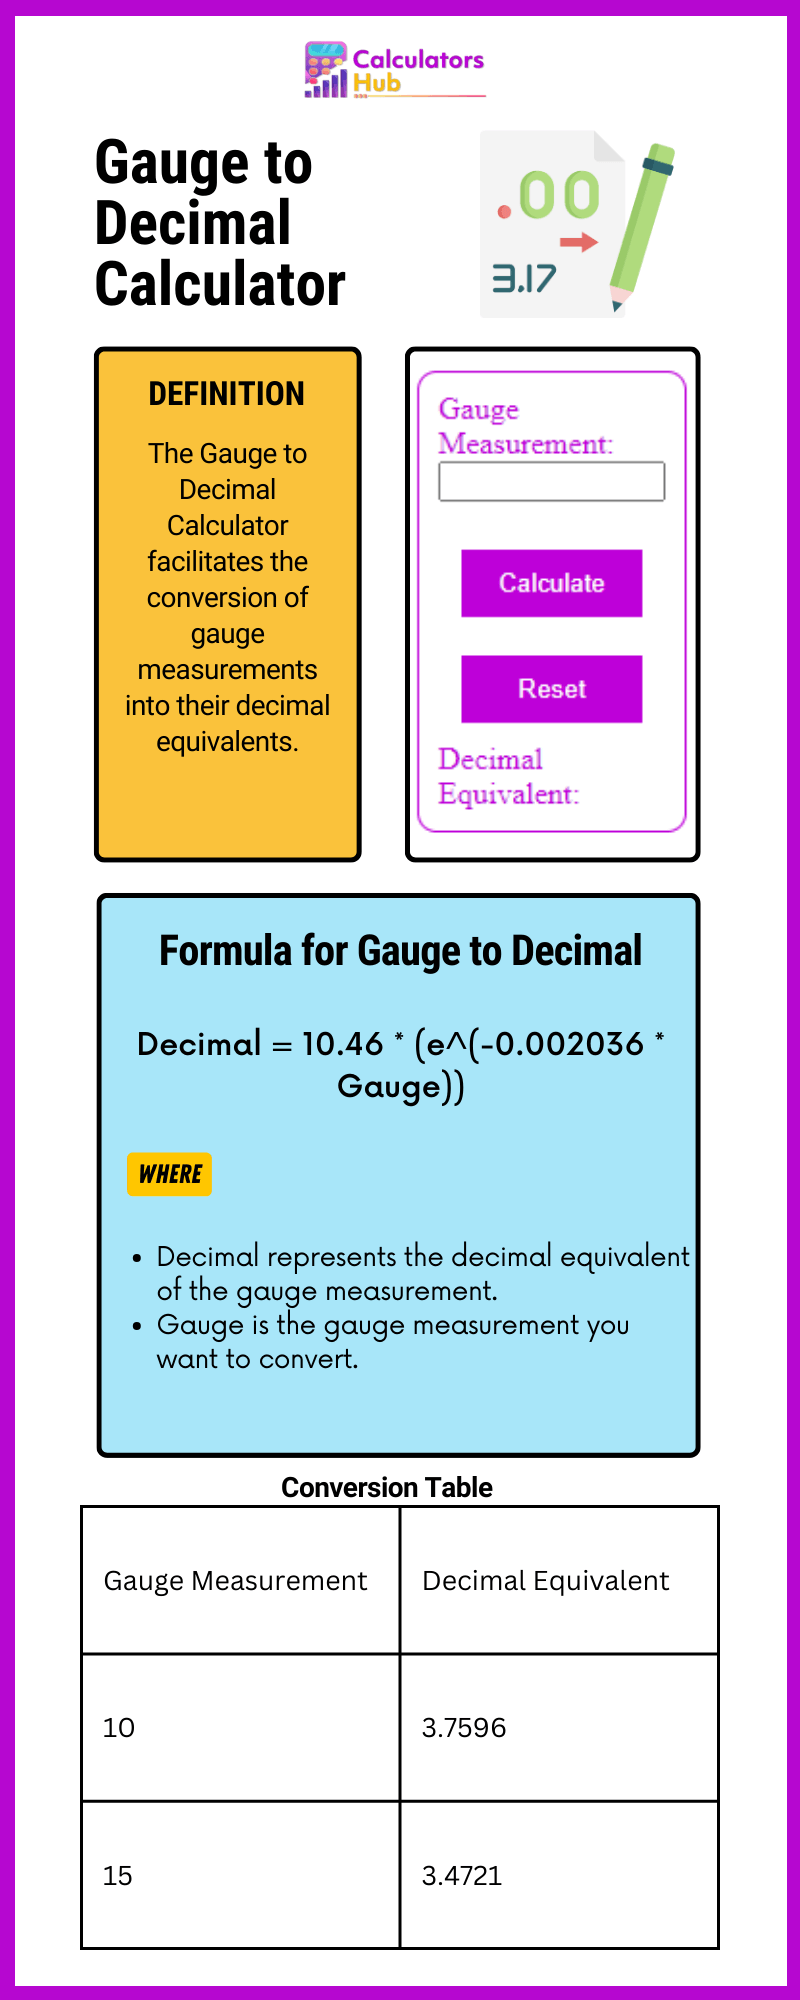 Gauge to Decimal Calculator